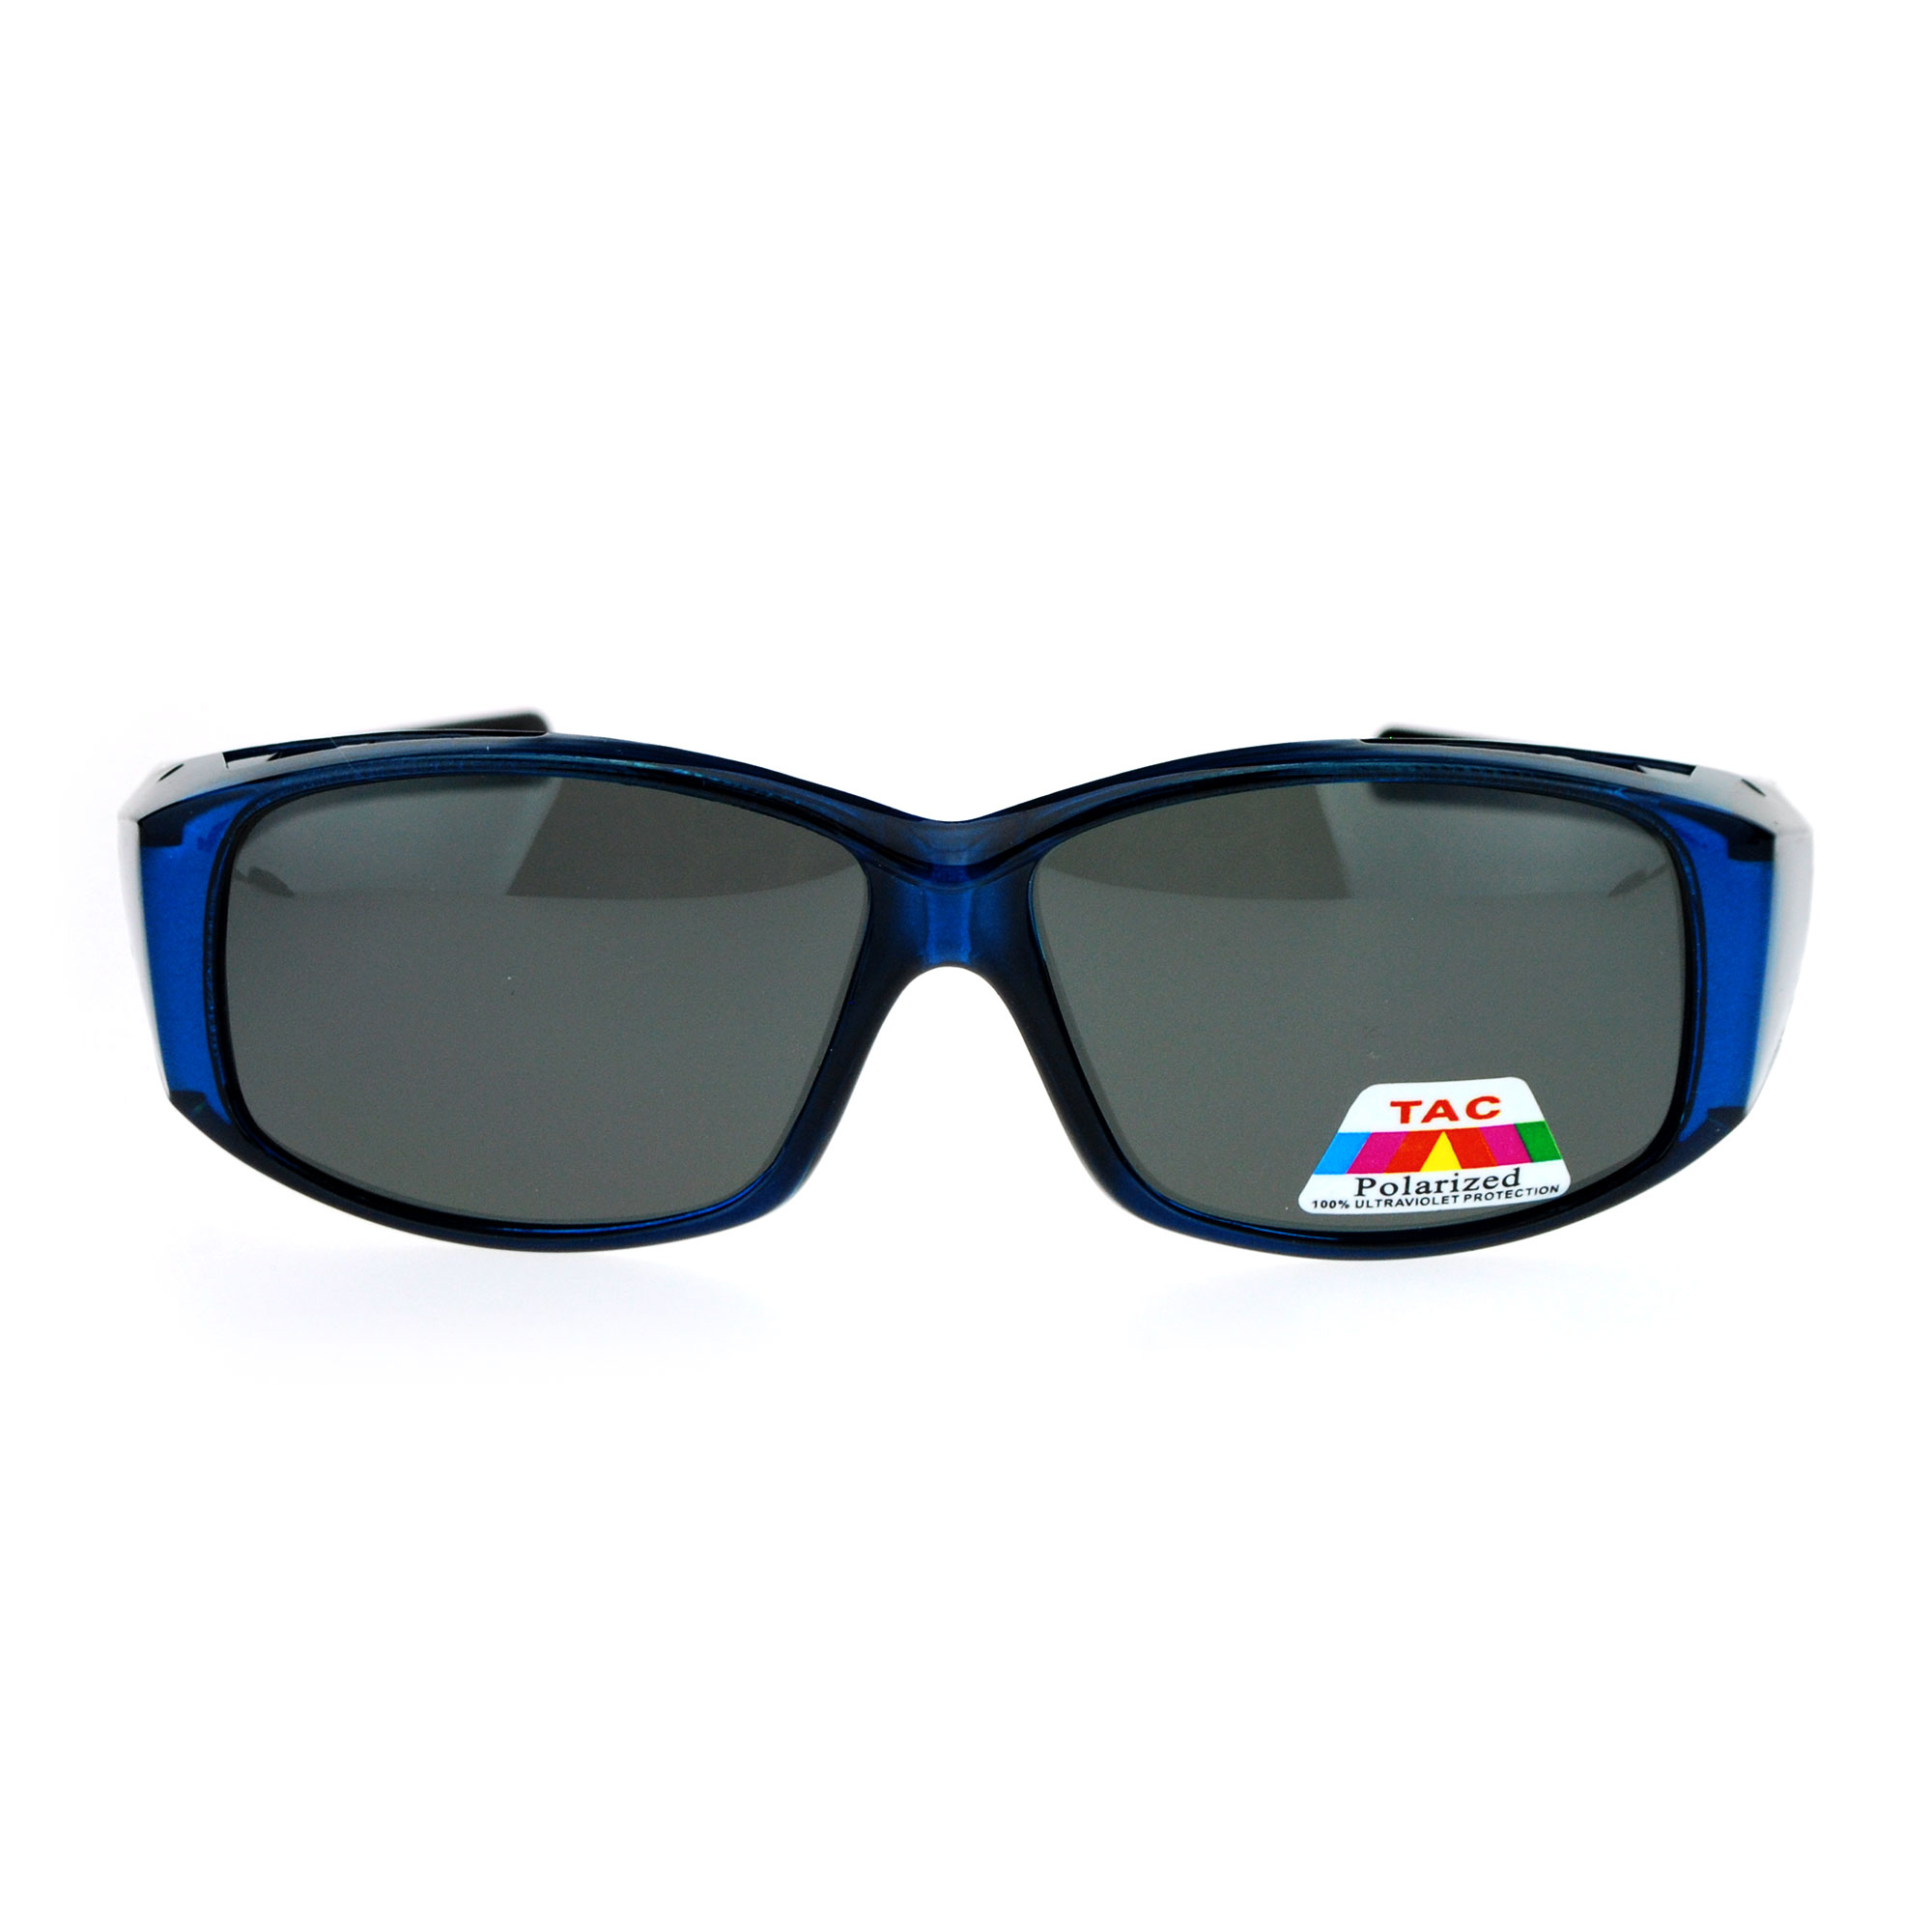 Polarized Lens Lightweight 60mm Fit Over Sunglasses | eBay